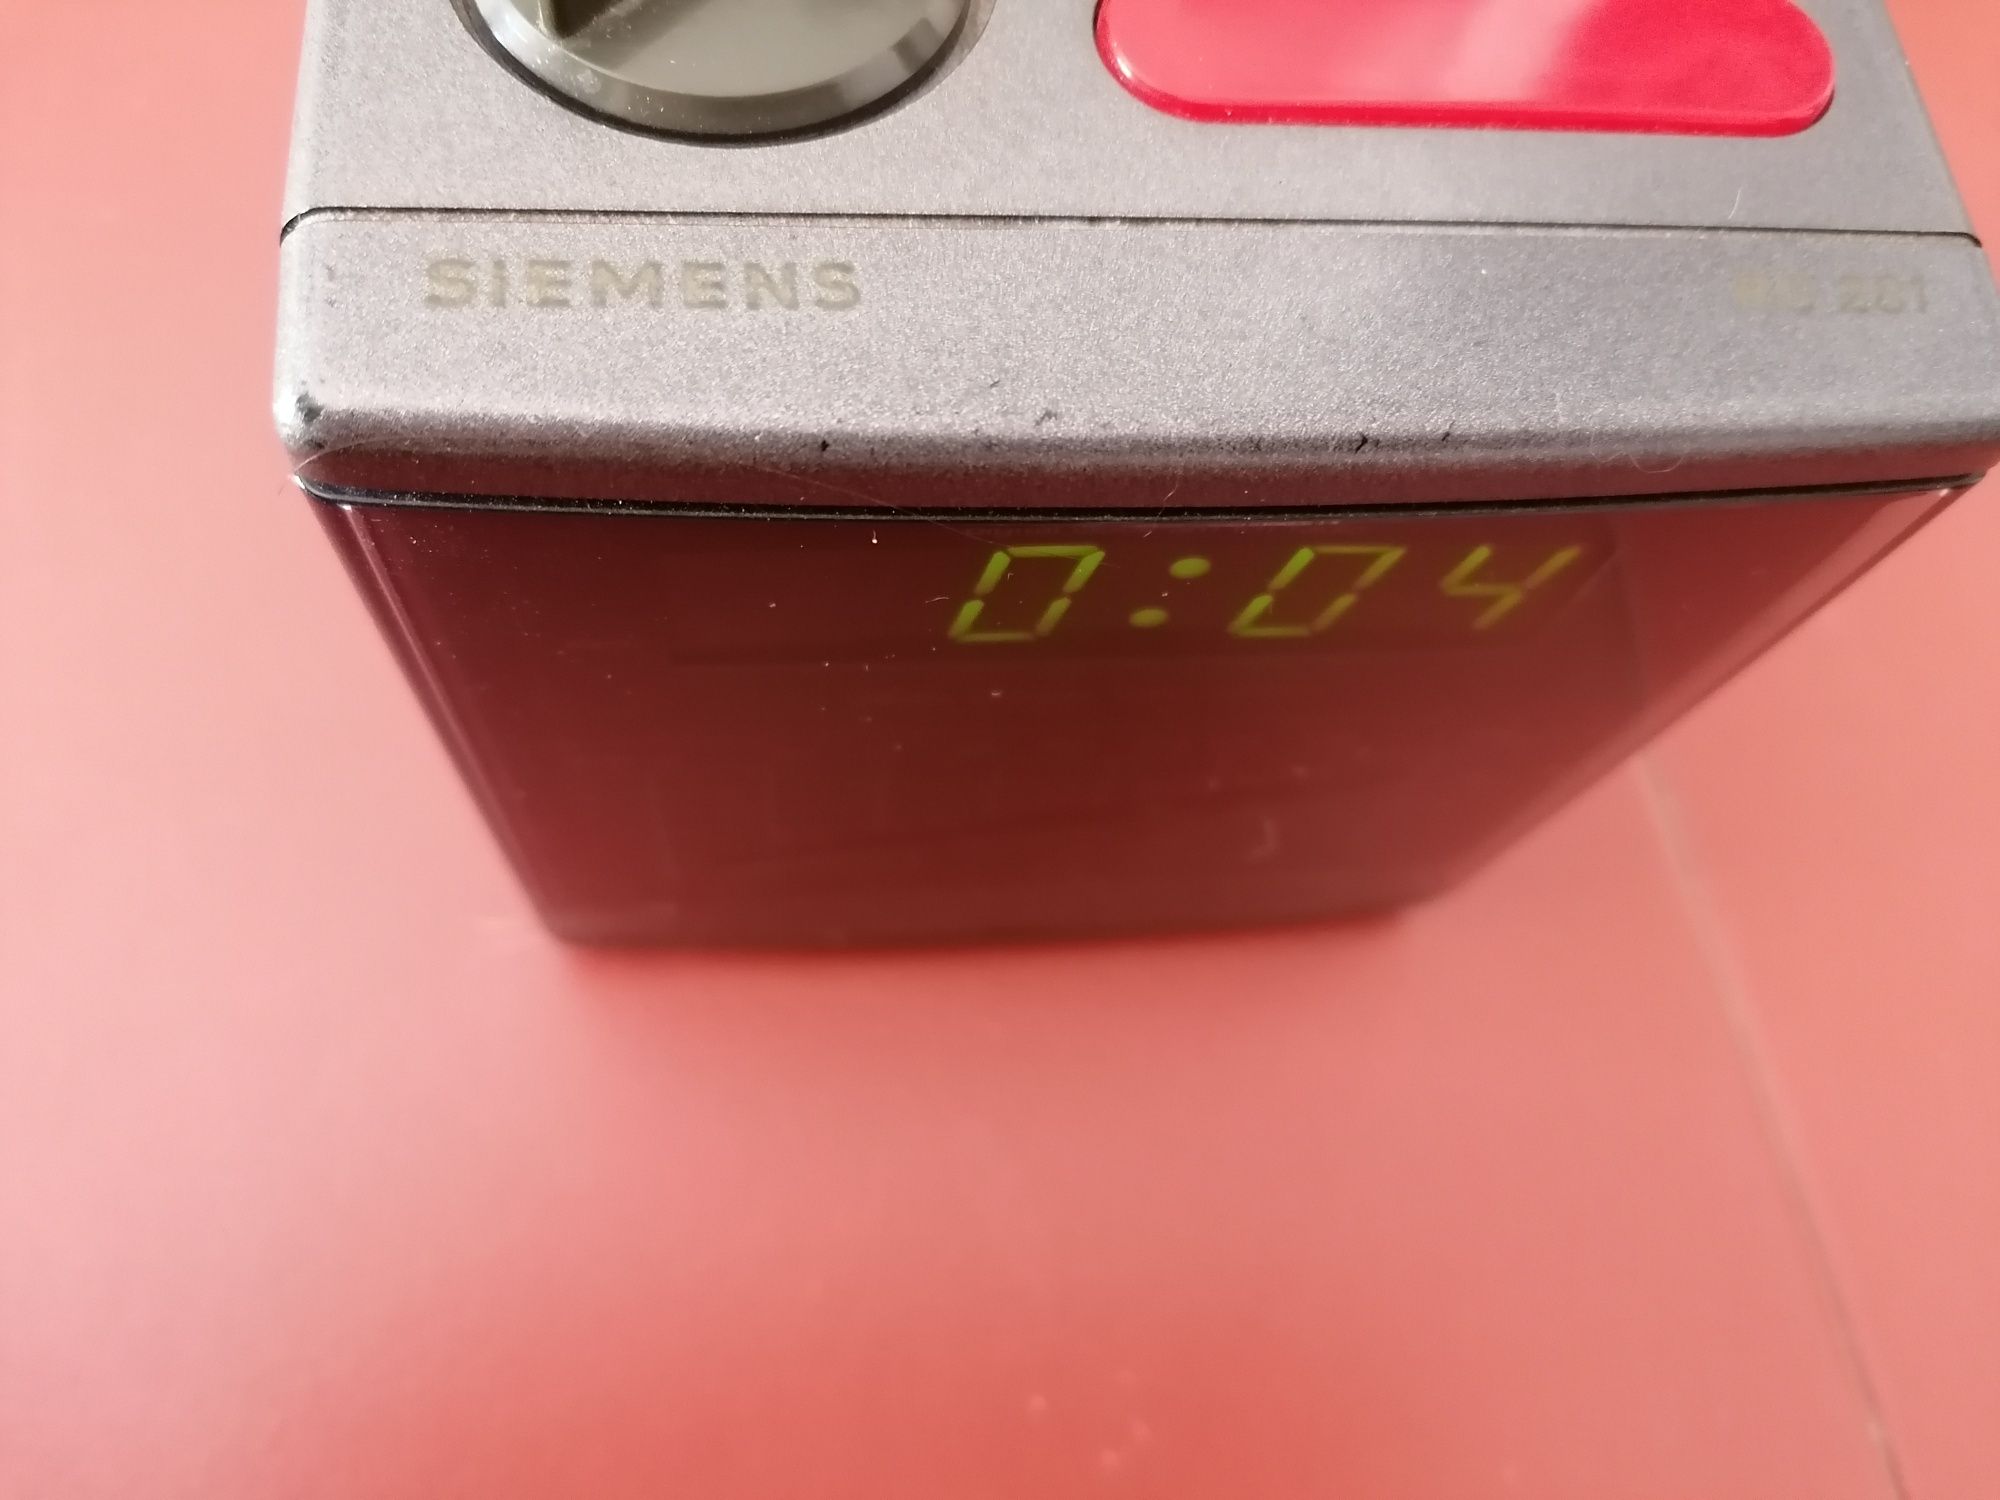 Relógio com rádio Siemens